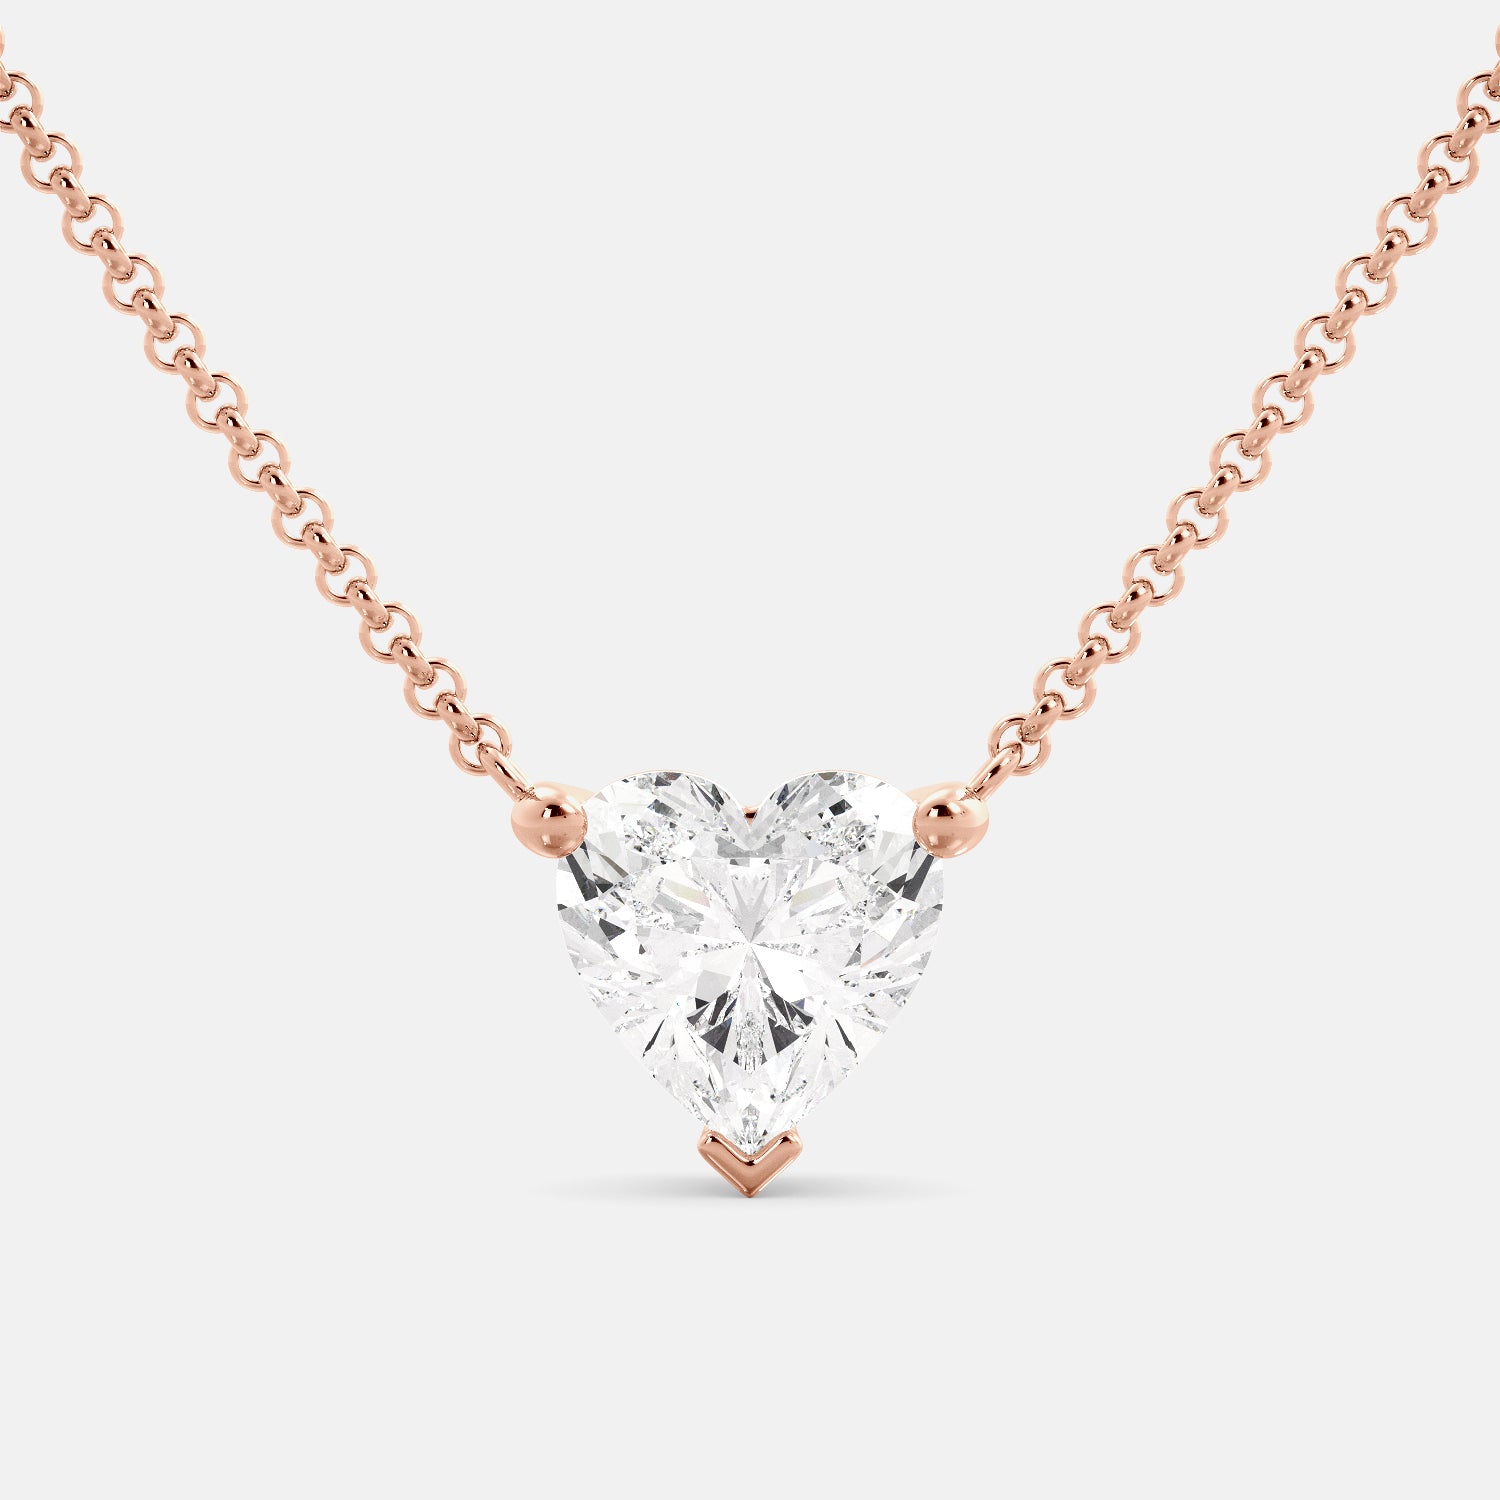 Diamond Solitaire Necklace / 14K Rose Gold Diamond Necklace 0.03ct /  Dangling Diamond Necklace / Floating Diamond / Diamond Bezel Necklace